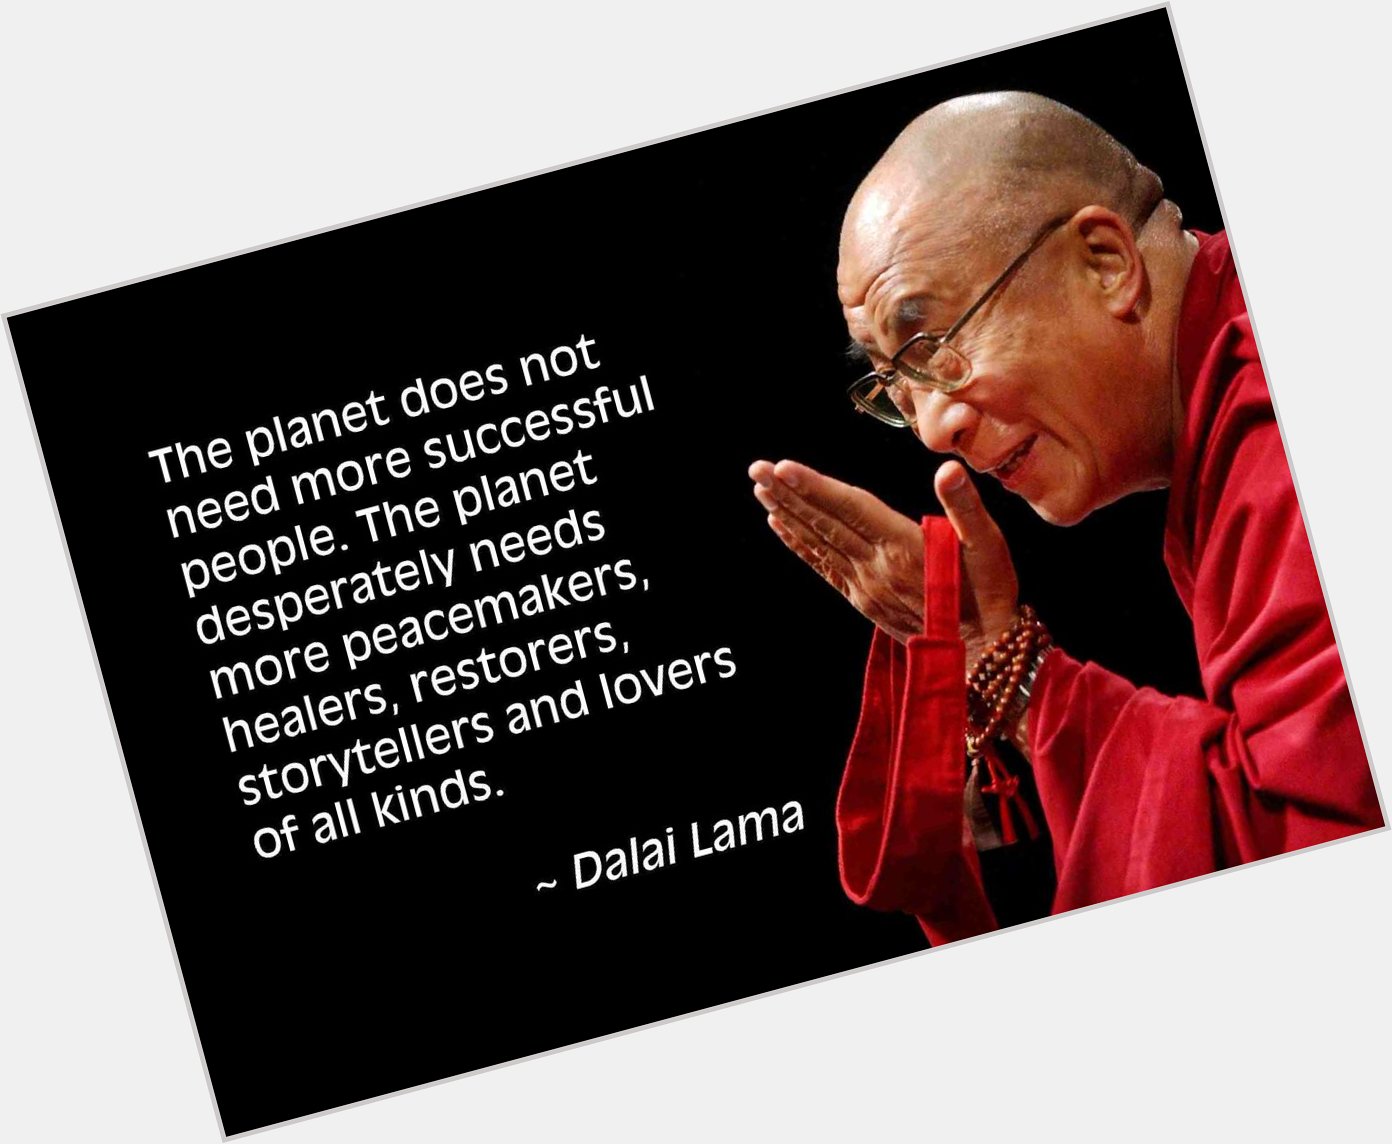 Happy 83rd birthday to the Dalai Lama! 